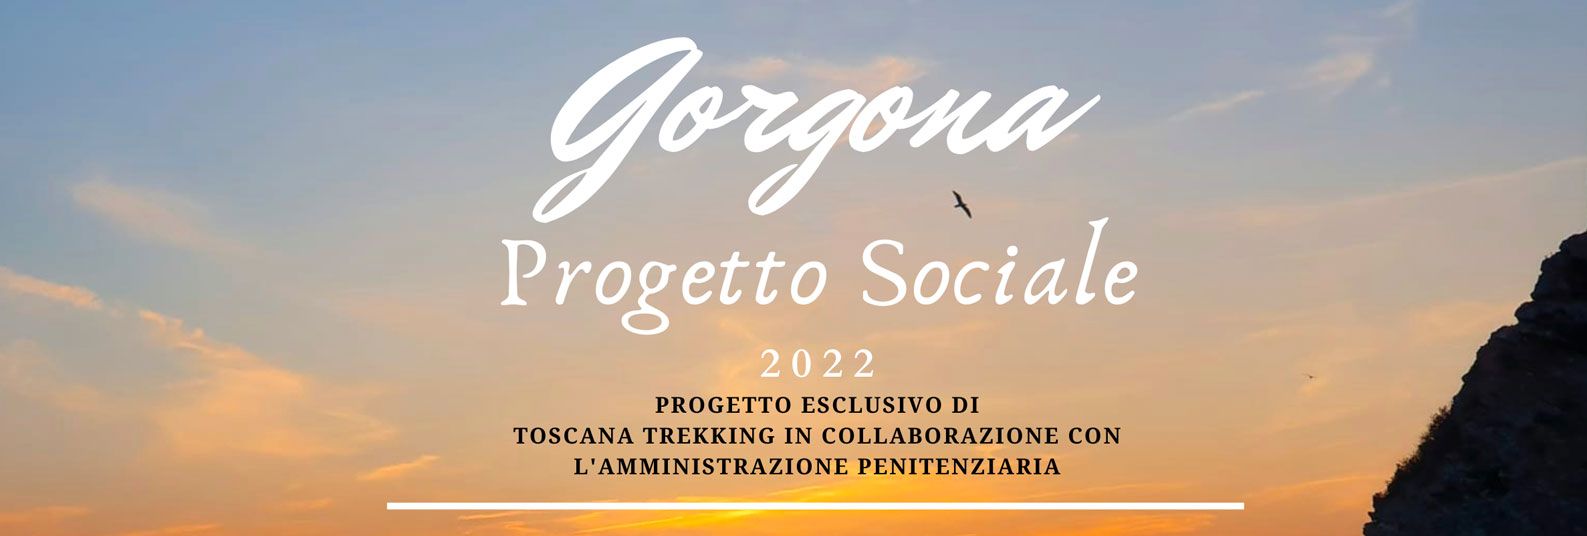 gorgona programma sociale